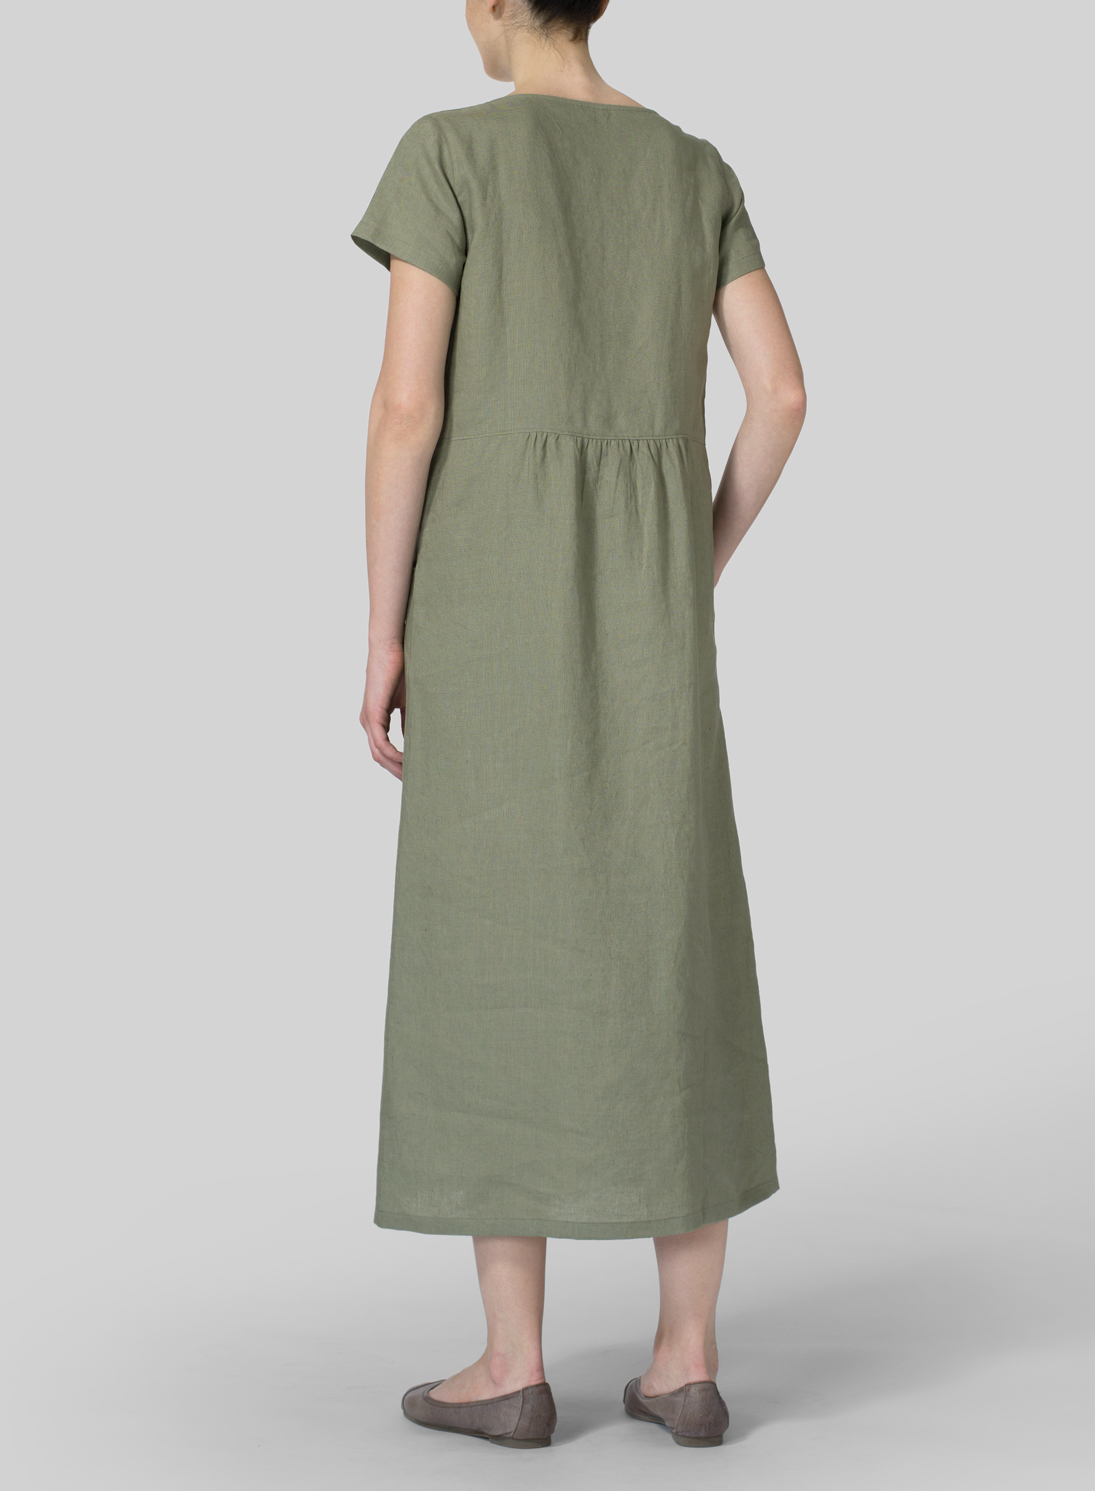 Olive Linen Short Sleeve Dress